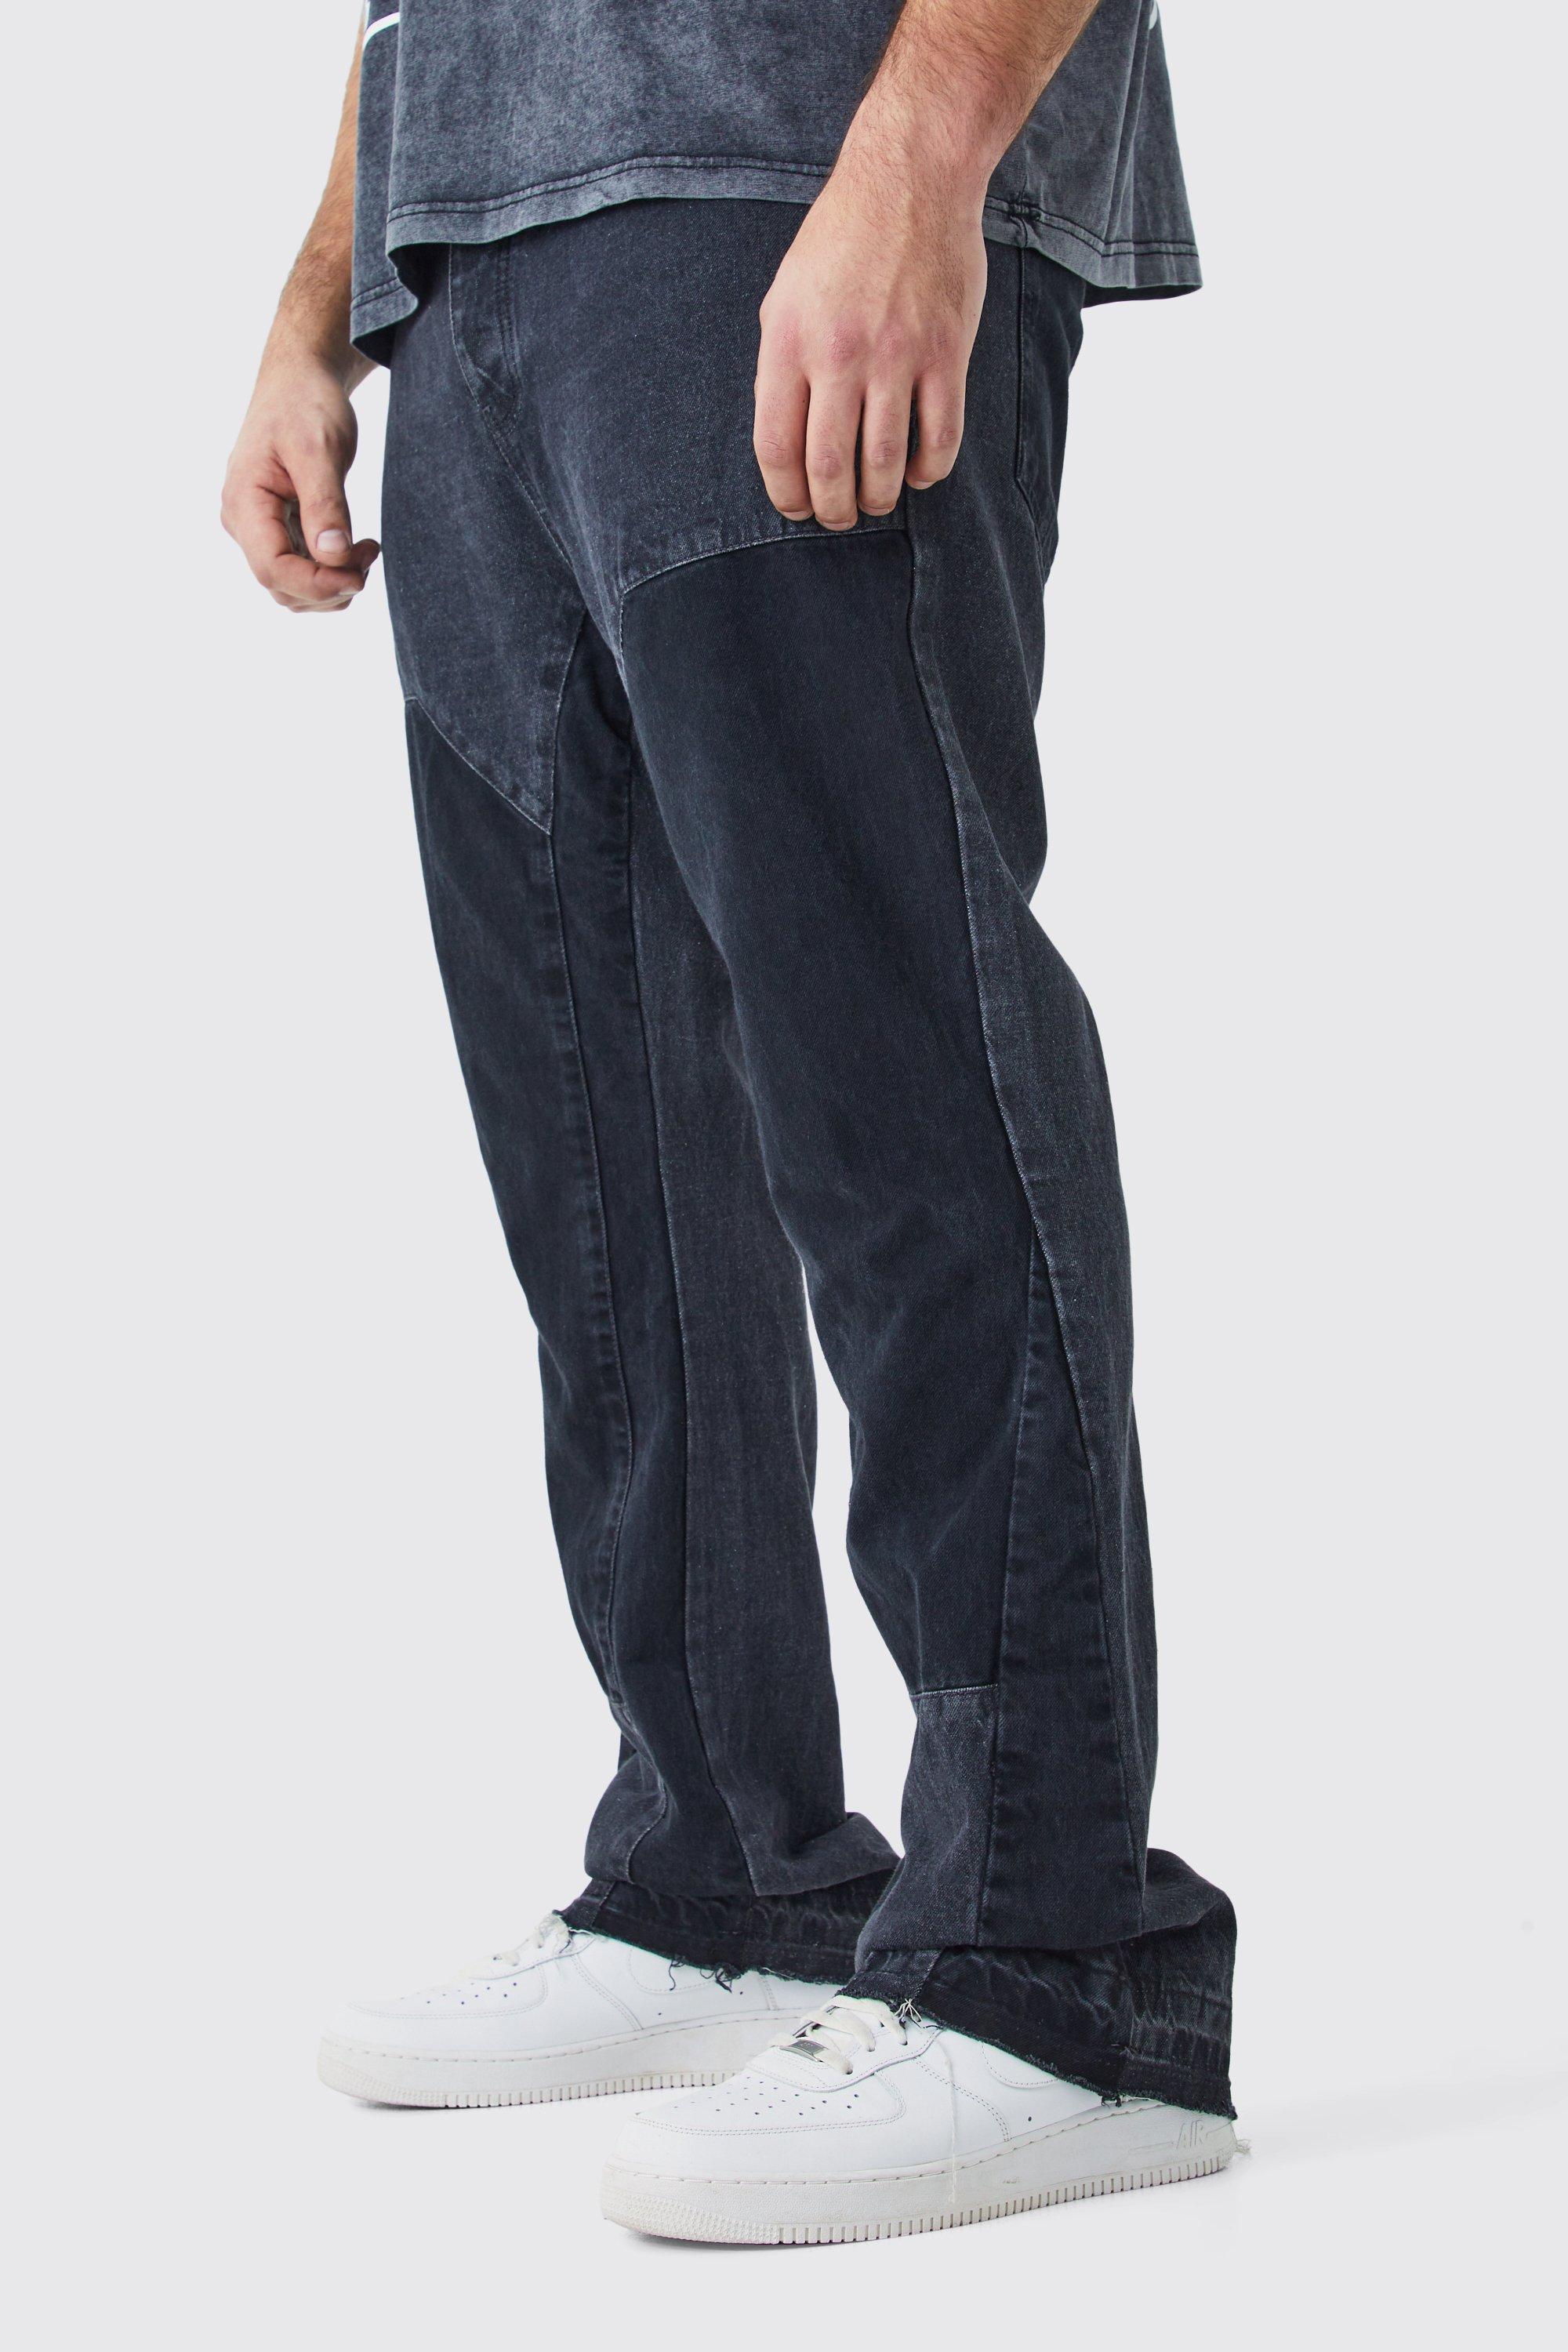 Image of Jeans Plus Size Slim Fit in denim rigido sovratinto stile Carpenter, Grigio